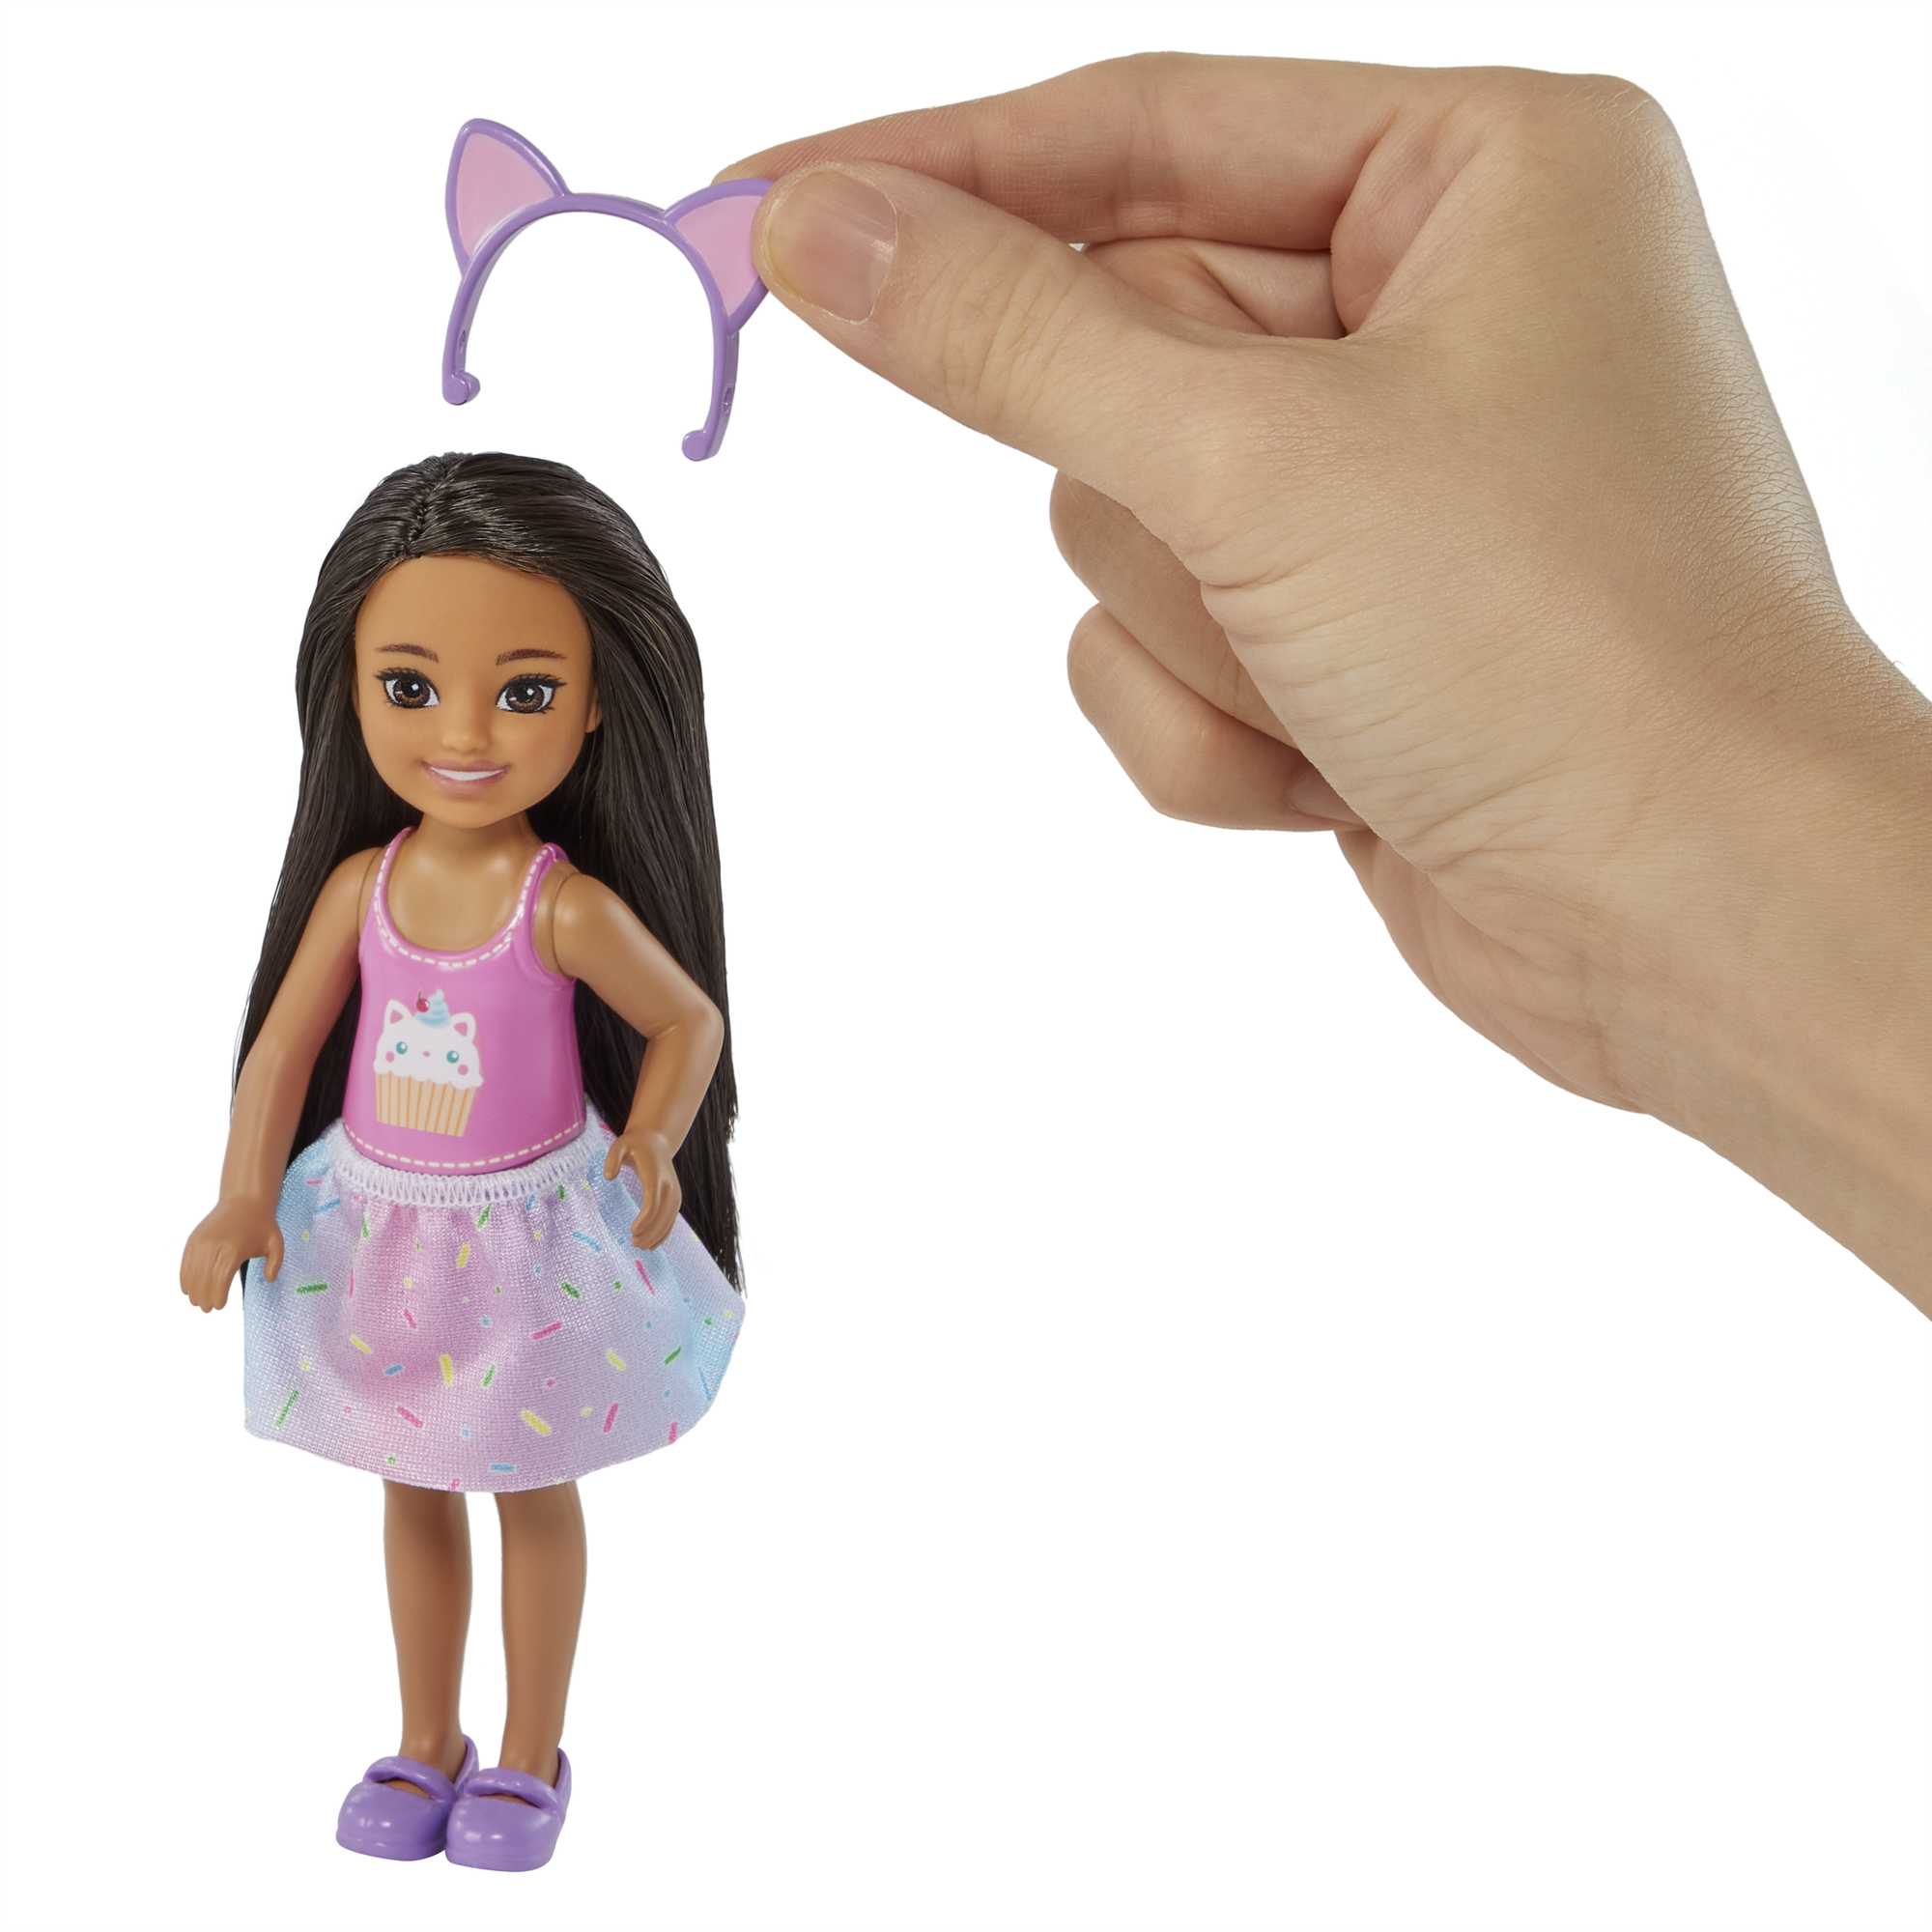 Vader Beschuldigingen Vuilnisbak Barbie Chelsea Doll & Accessories HGT09 | Mattel